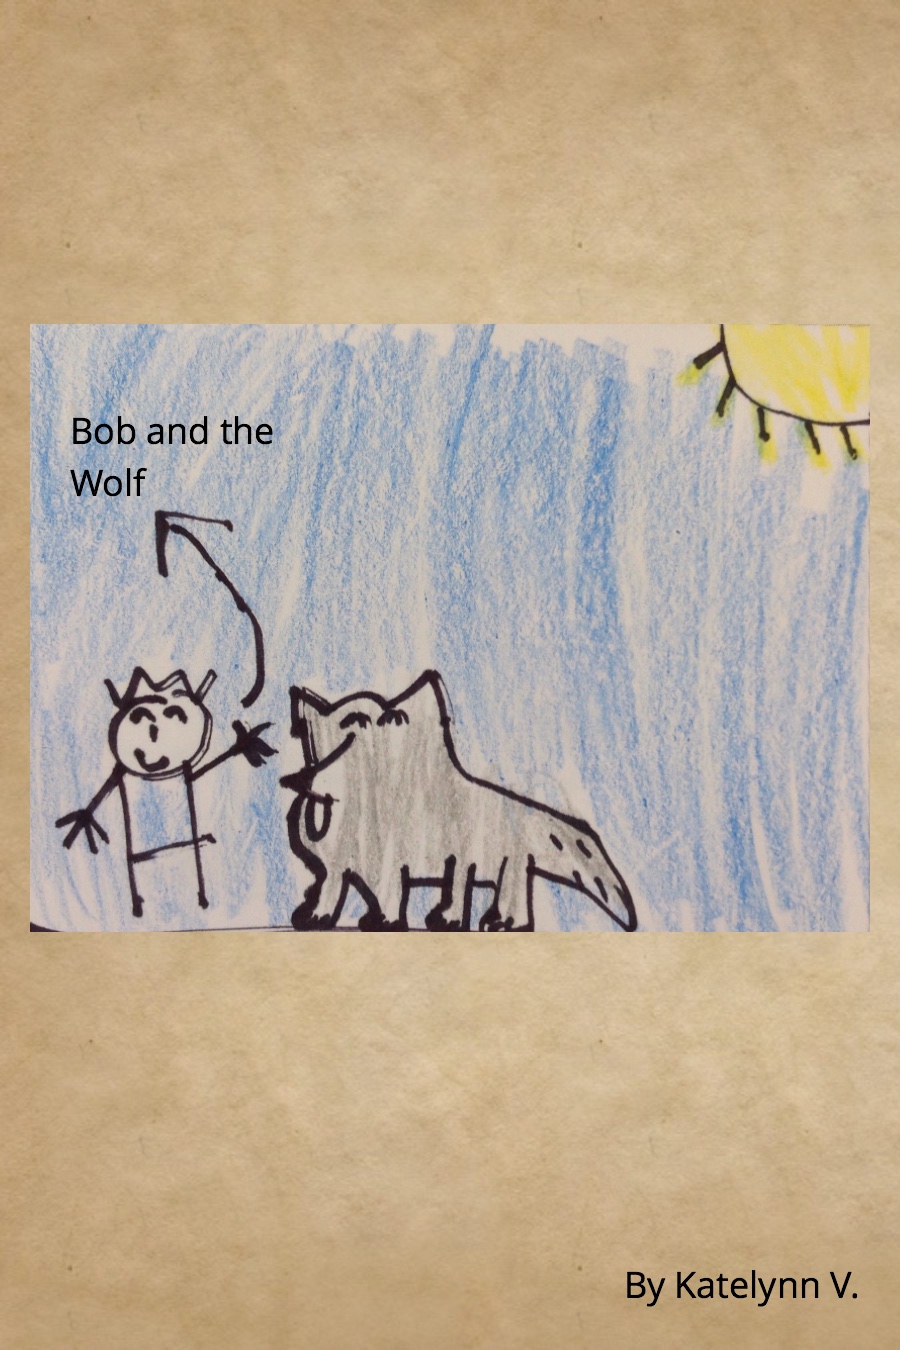 Bob and the Wolf by Katelynn Kate V